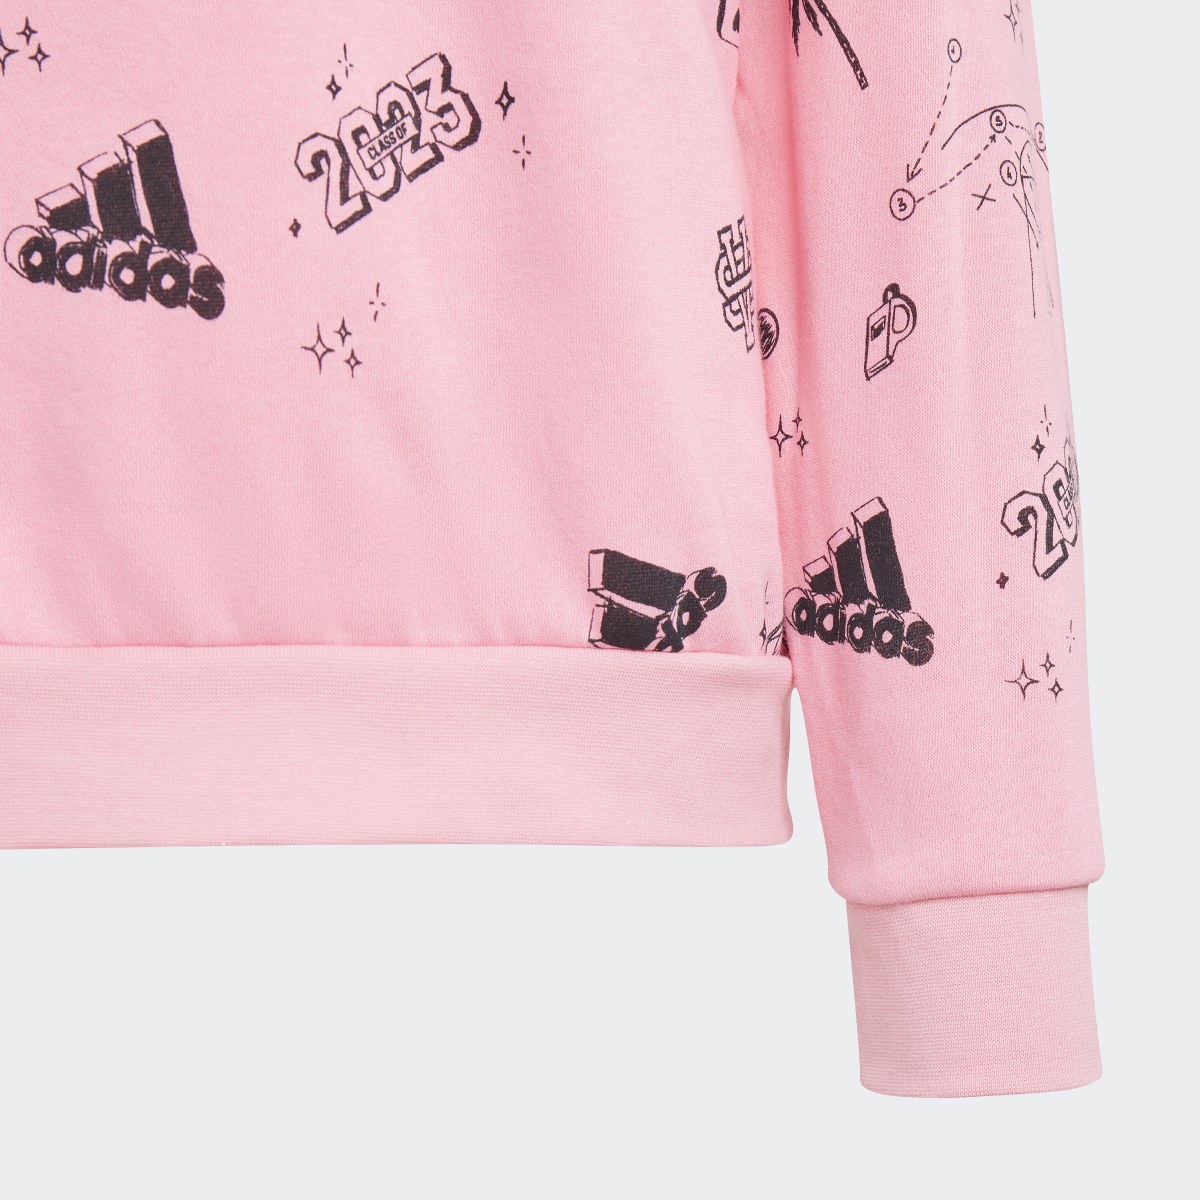 Adidas Sweatshirt Brand Love – Criança. 5